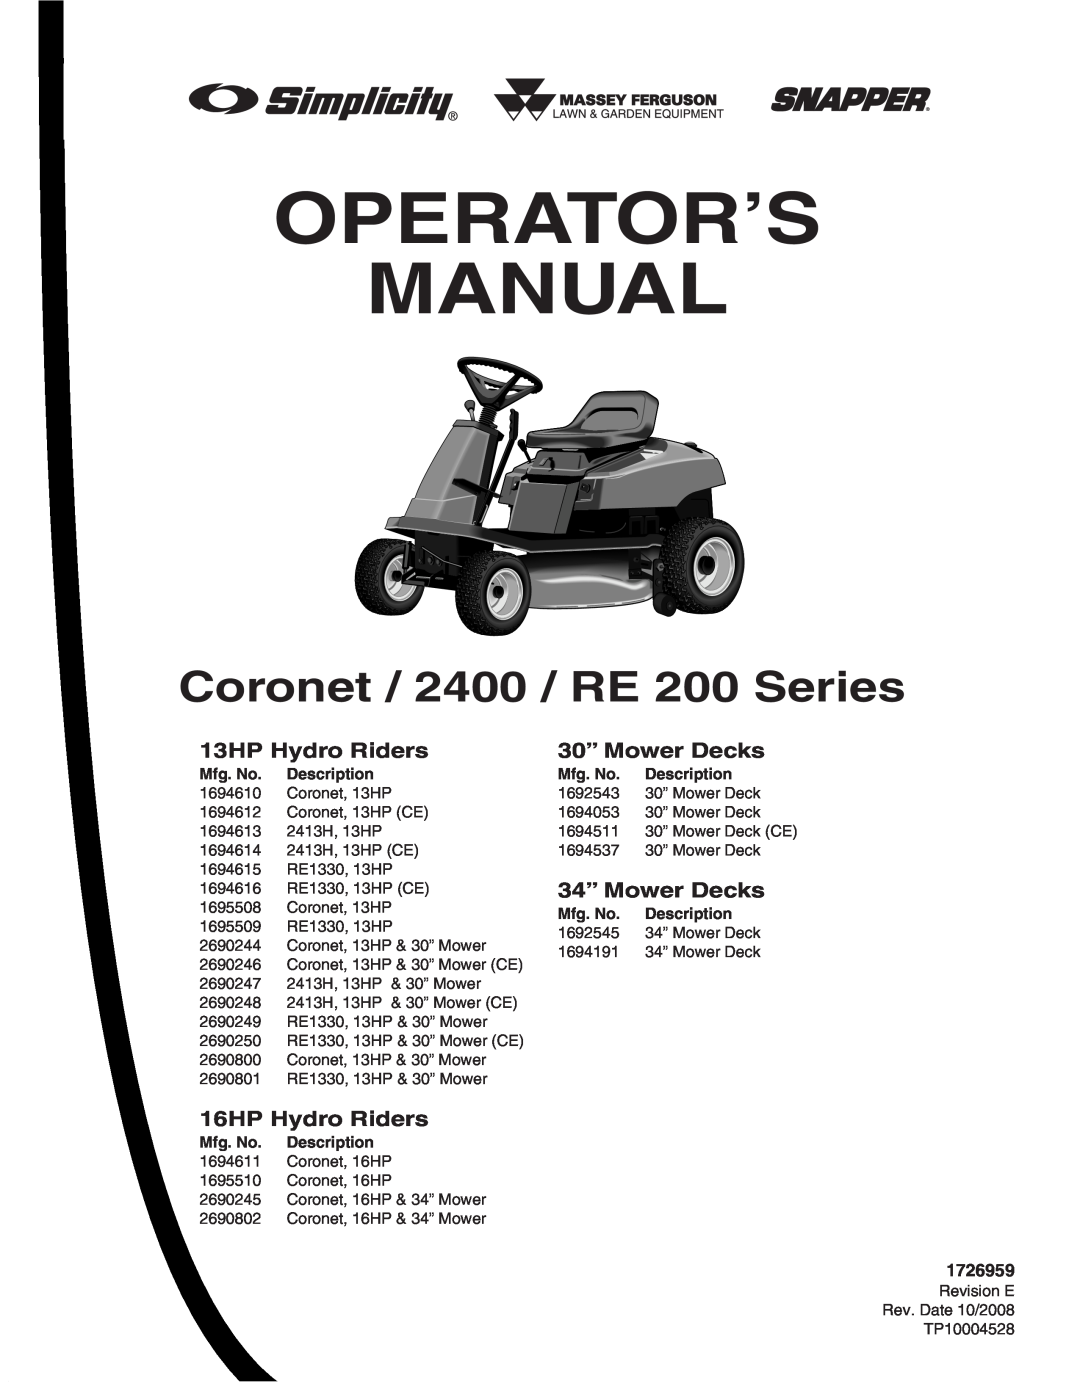 Snapper manual Operator’S Manual, Coronet / 2400 / RE 200 Series 